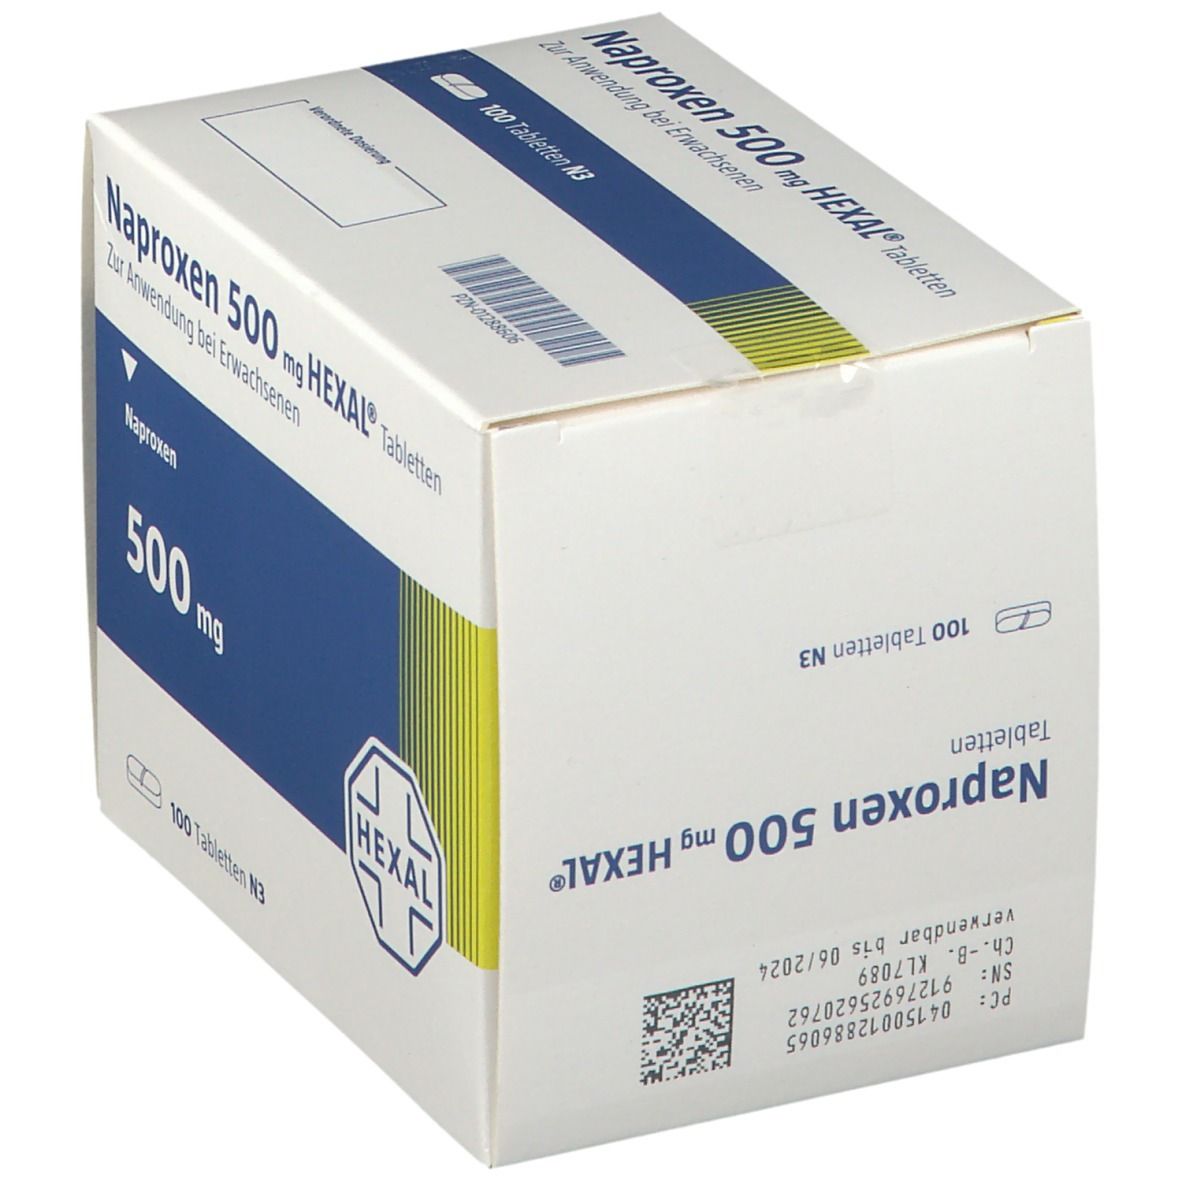 Naproxen 500 mg HEXAL®